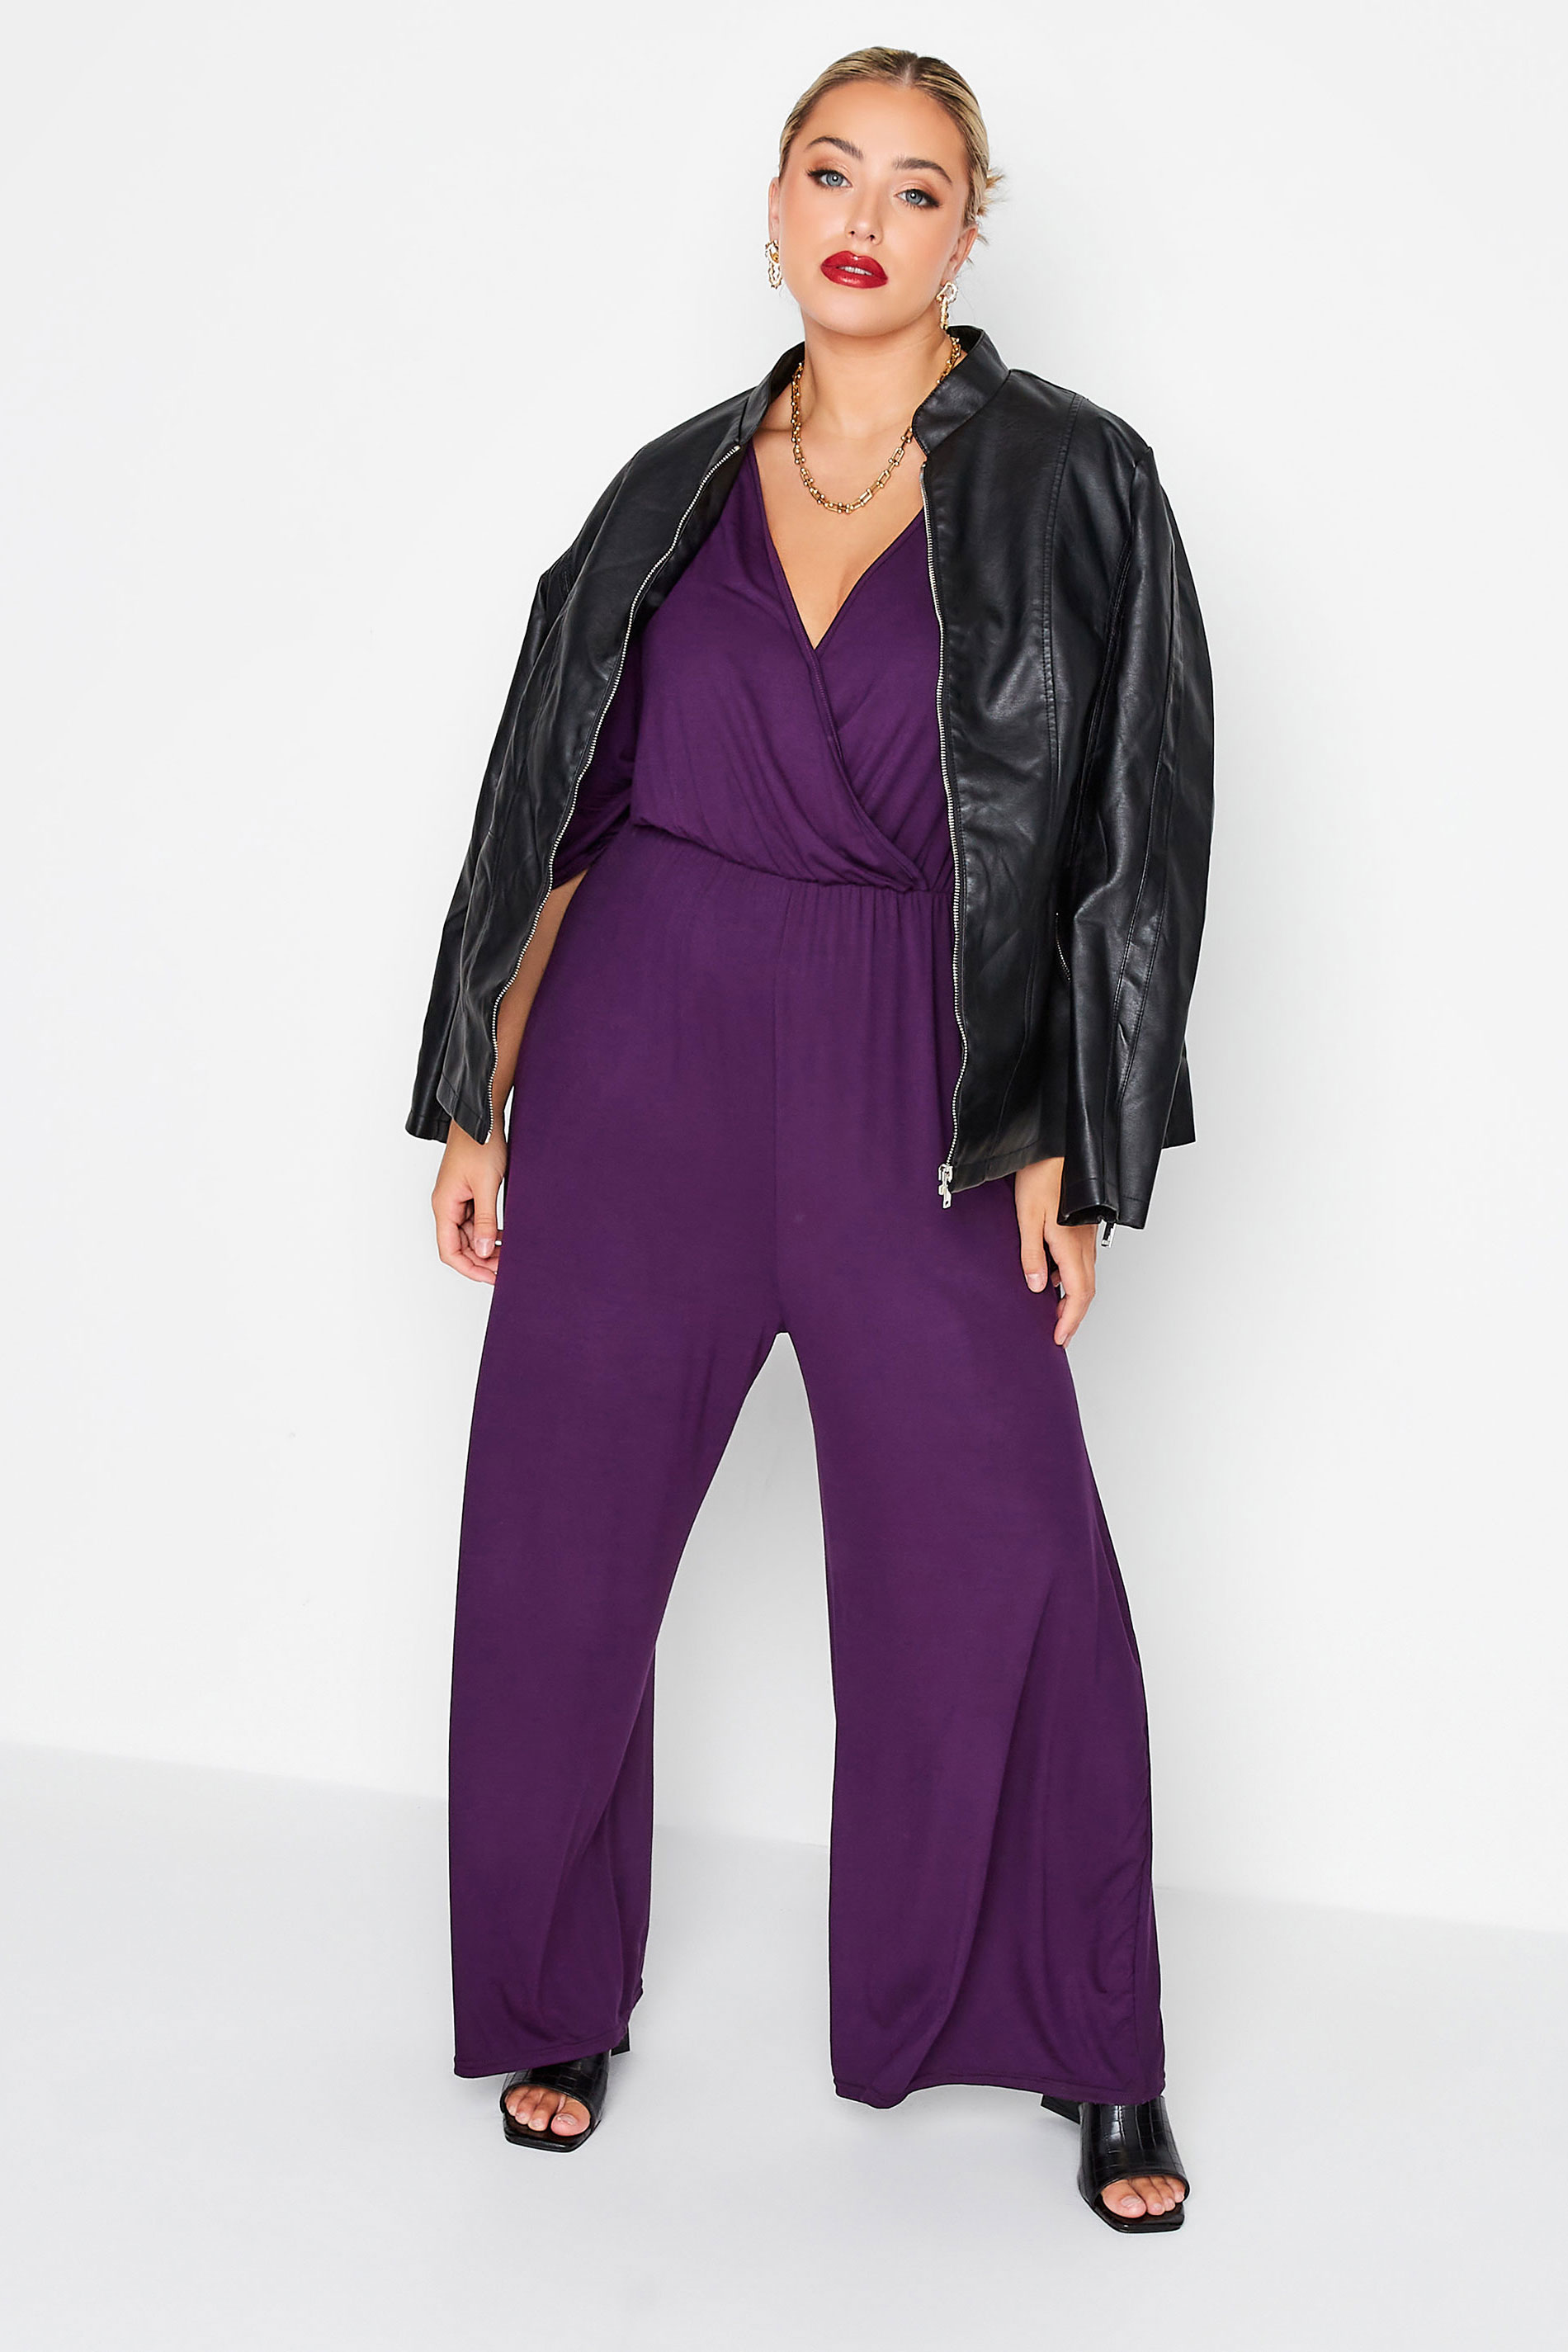 LIMITED COLLECTION Plus Size Dark Purple Wrap Culotte Jumpsuit | Yours Clothing 2